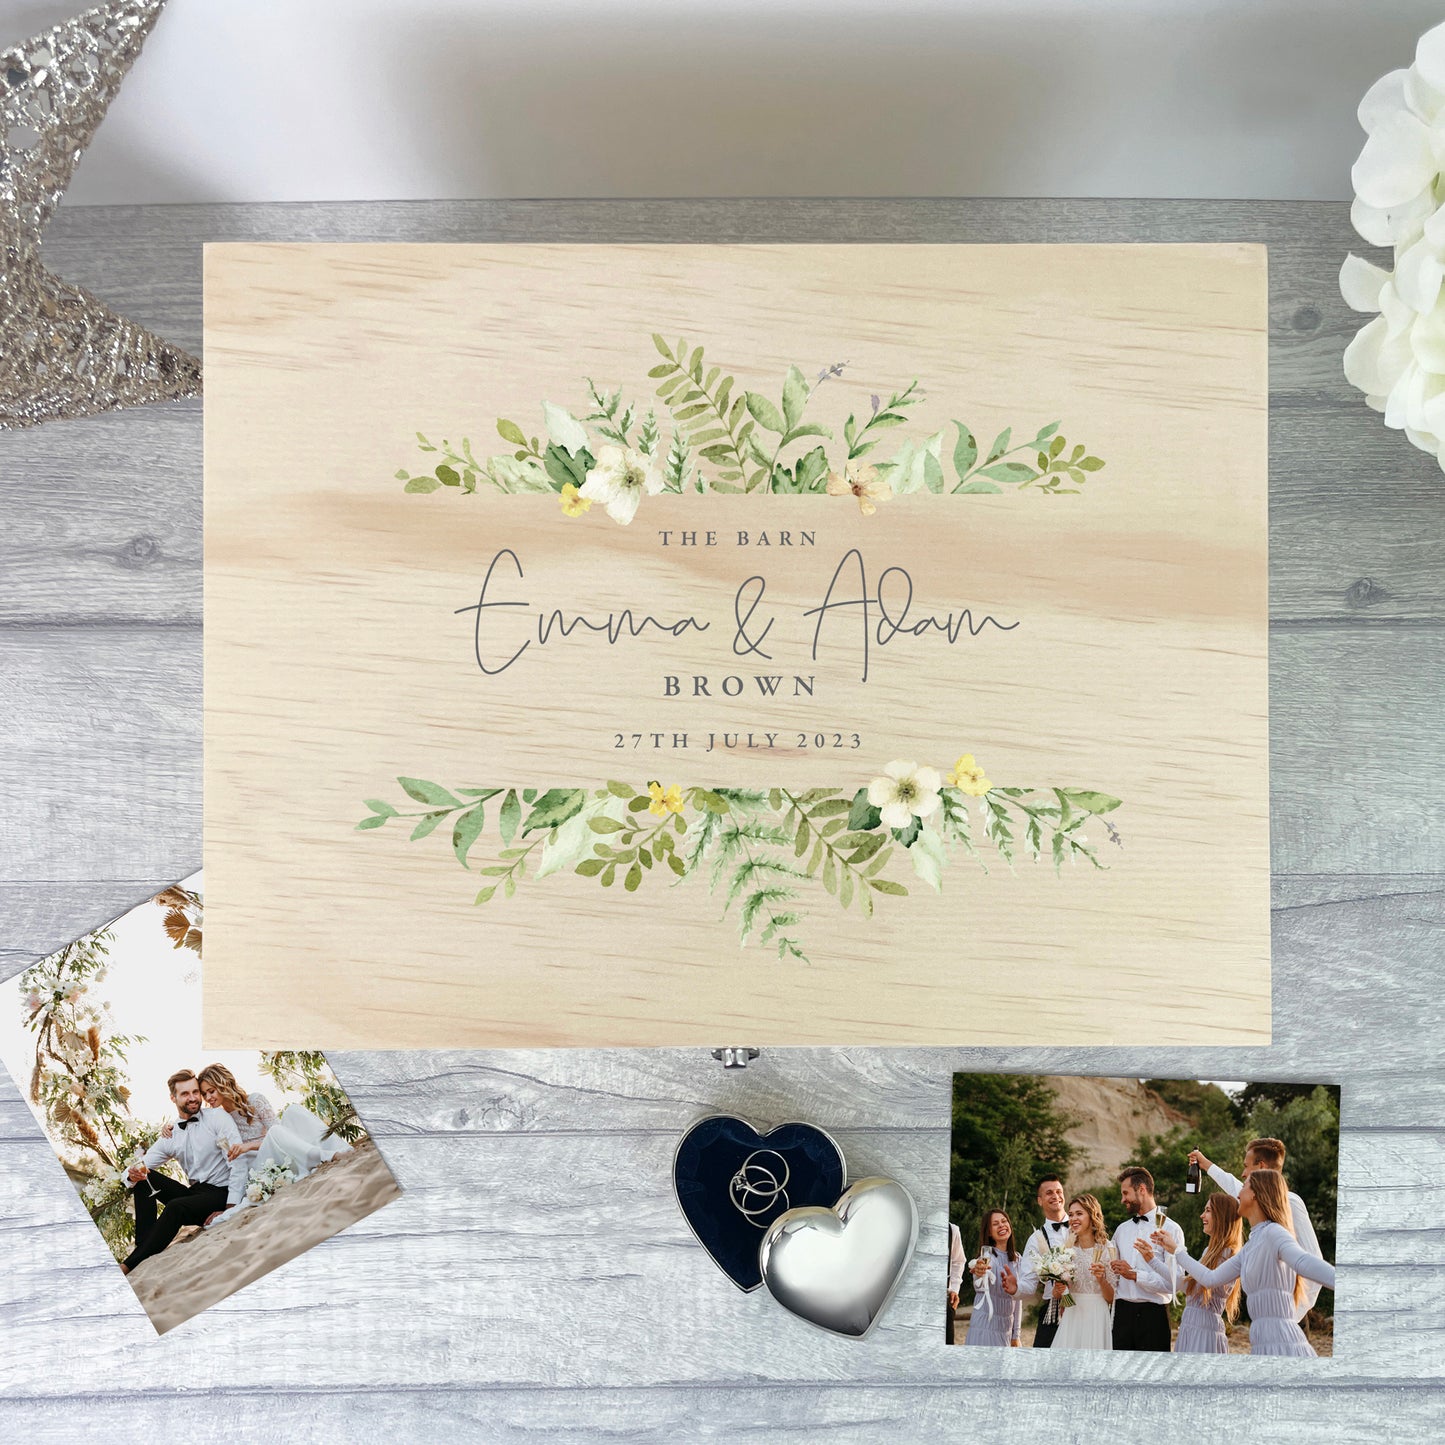 Personalised Wooden Green & Yellow Floral Wedding Keepsake Memory Box - 4 Sizes (20cm | 26cm | 30cm | 36cm)